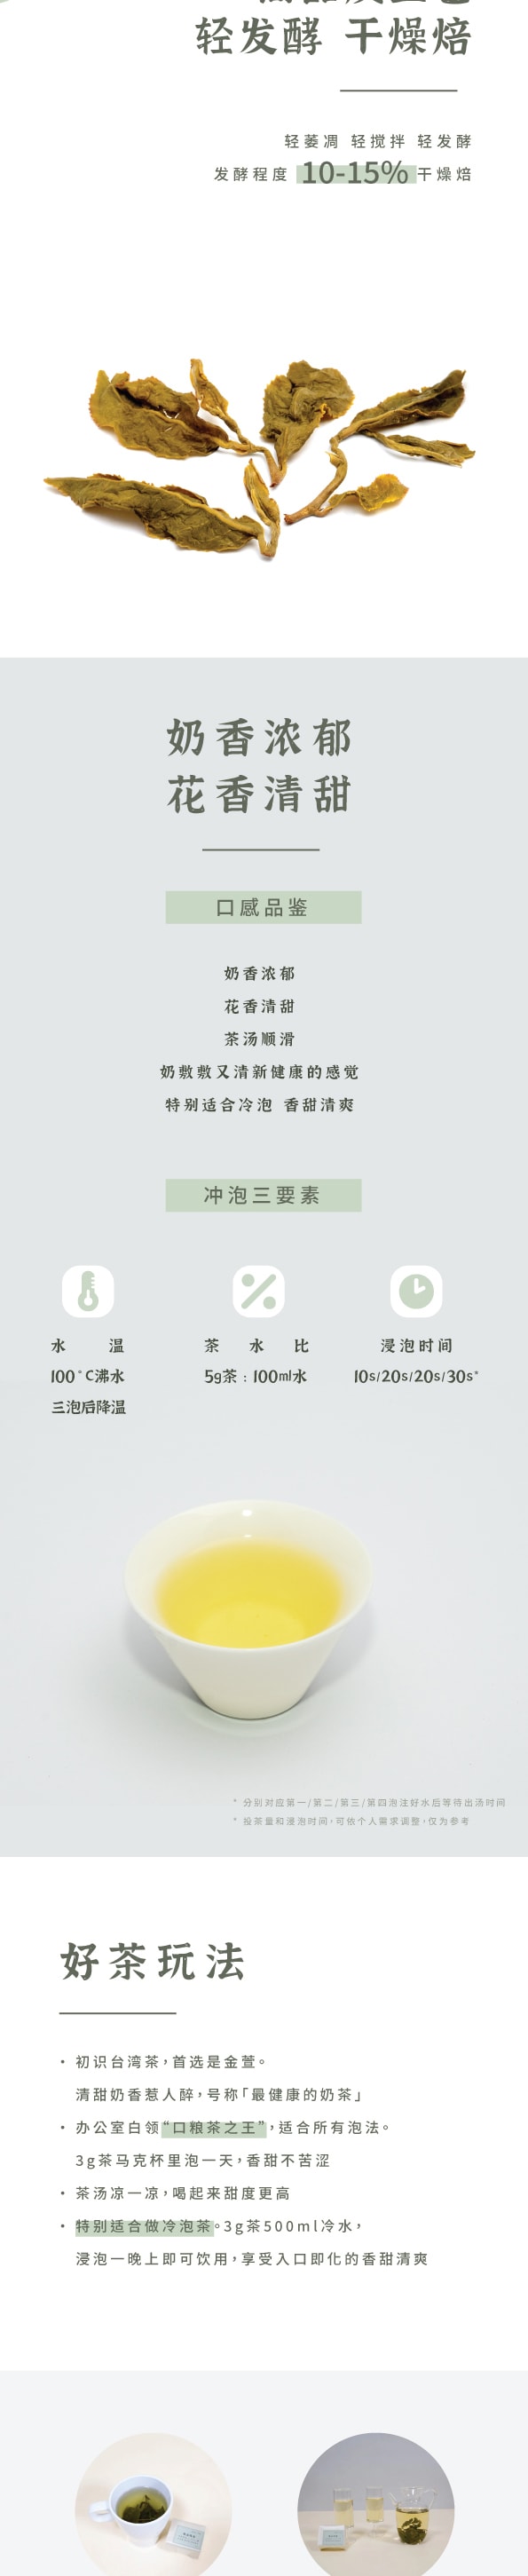 ZhaoTea 台湾乌龙茶金萱 清甜奶香 口感顺滑 大受欢迎的台湾乌龙茶 试饮三连泡 茶叶 乌龙茶 15g